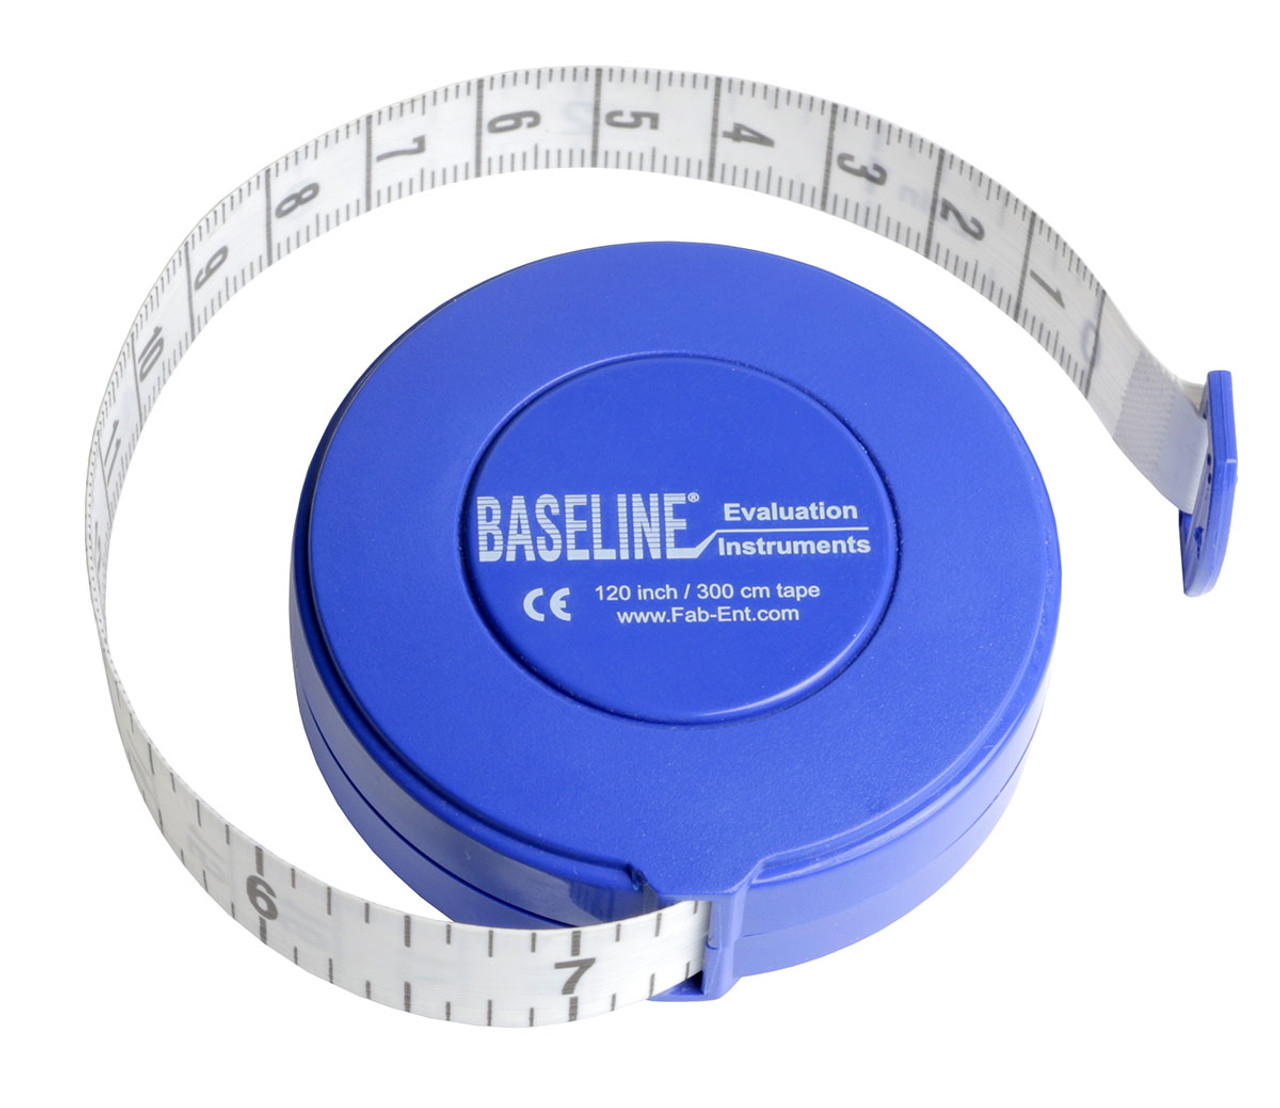 Baseline¨ Measurement Tape, 120 inch, 25 each